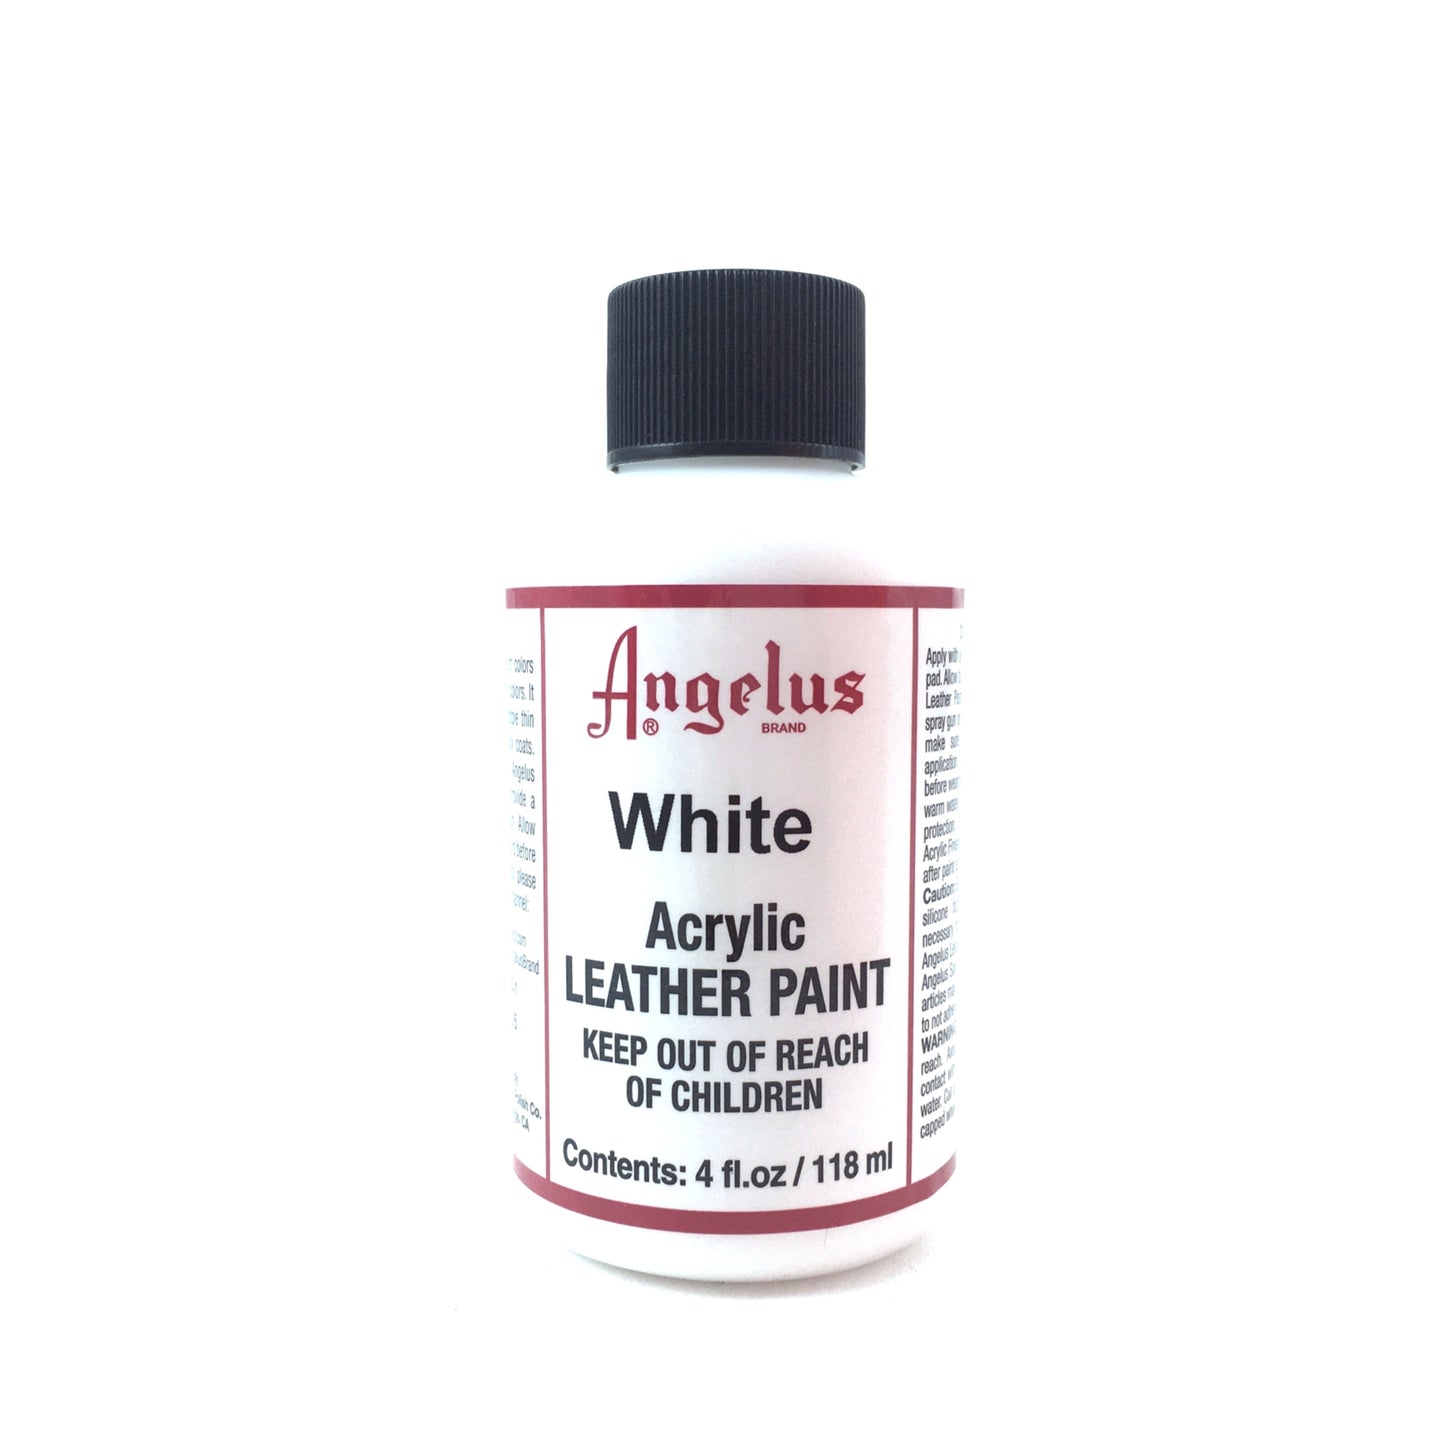 Angelus Acrylic Leather Paint - 4 oz. - Matte White by Angelus - K. A. Artist Shop